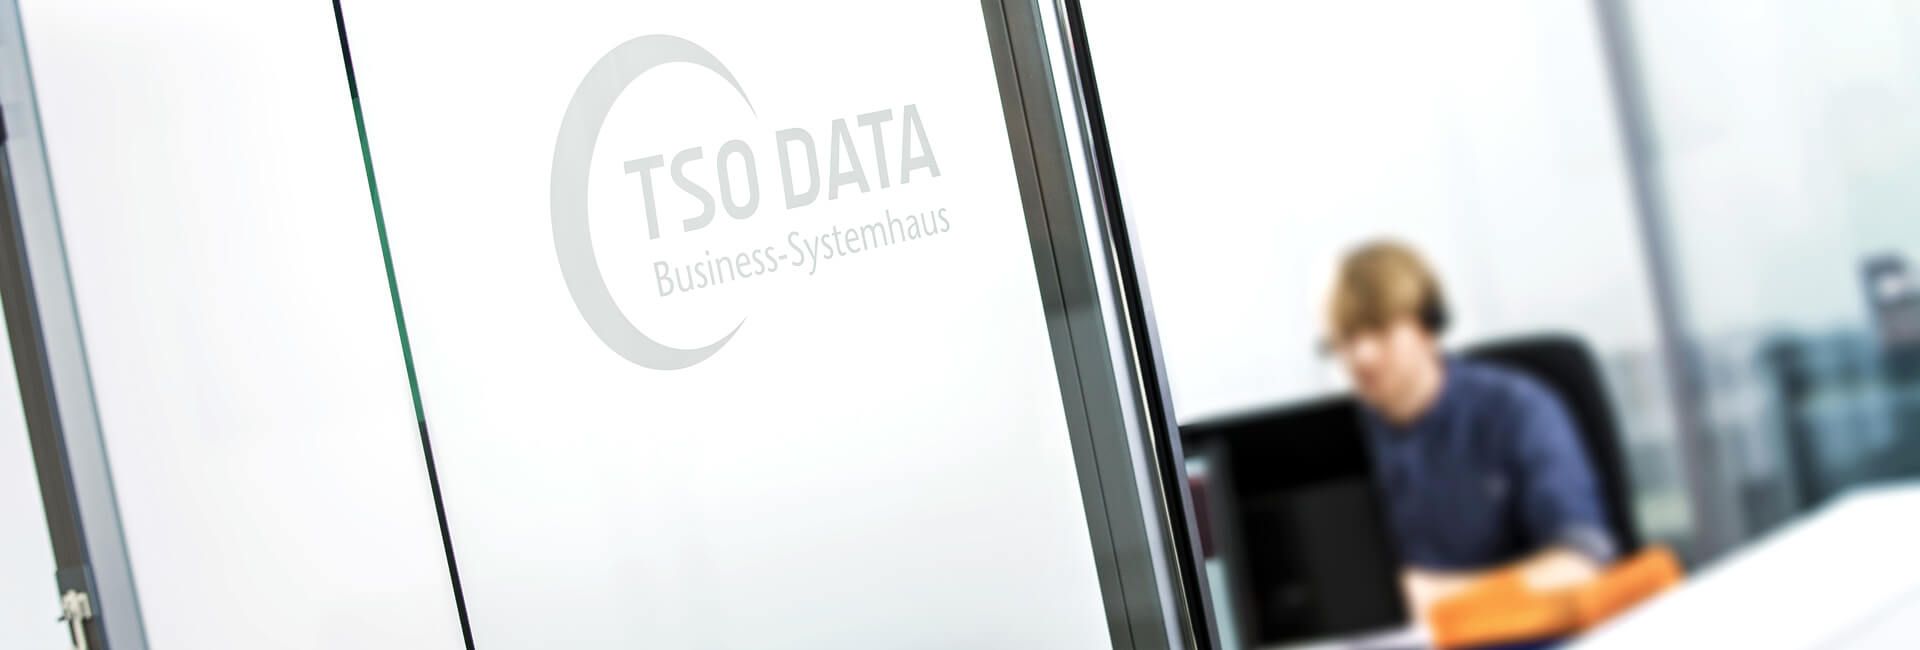 TSO-DATA - IT project methodology